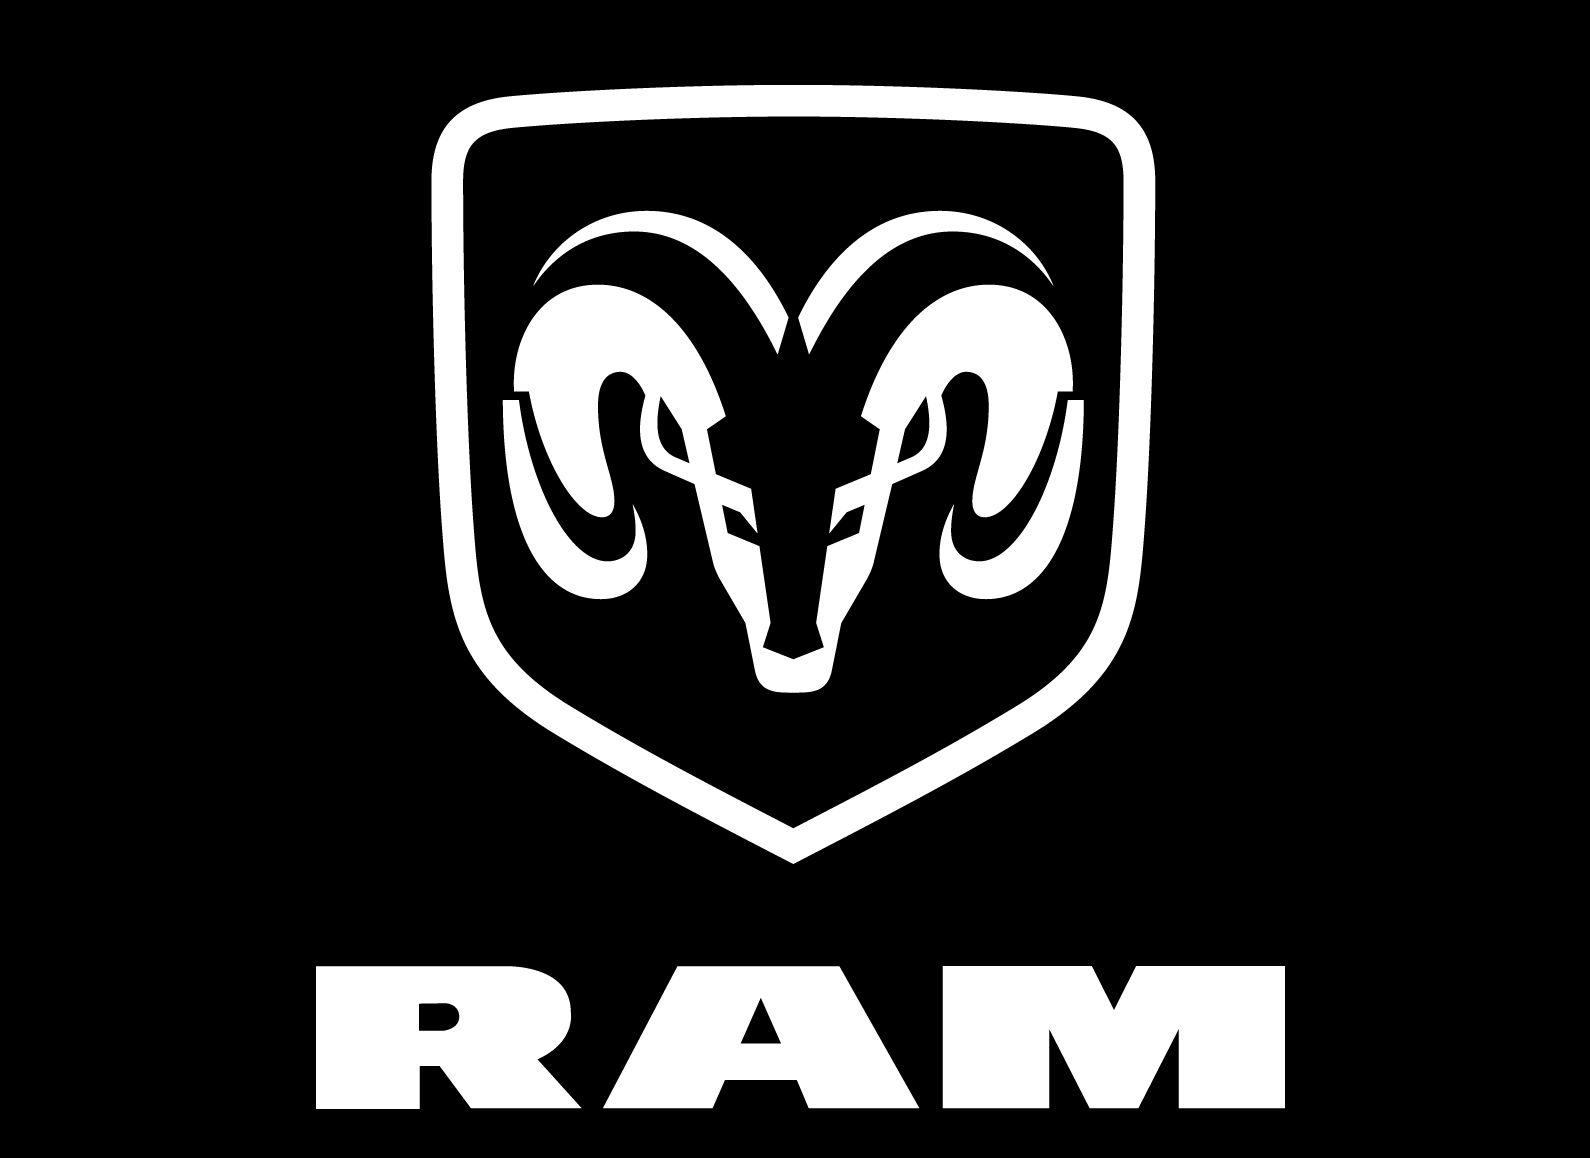 Ram Truck Logo - Ram Logo | World Cars Brands